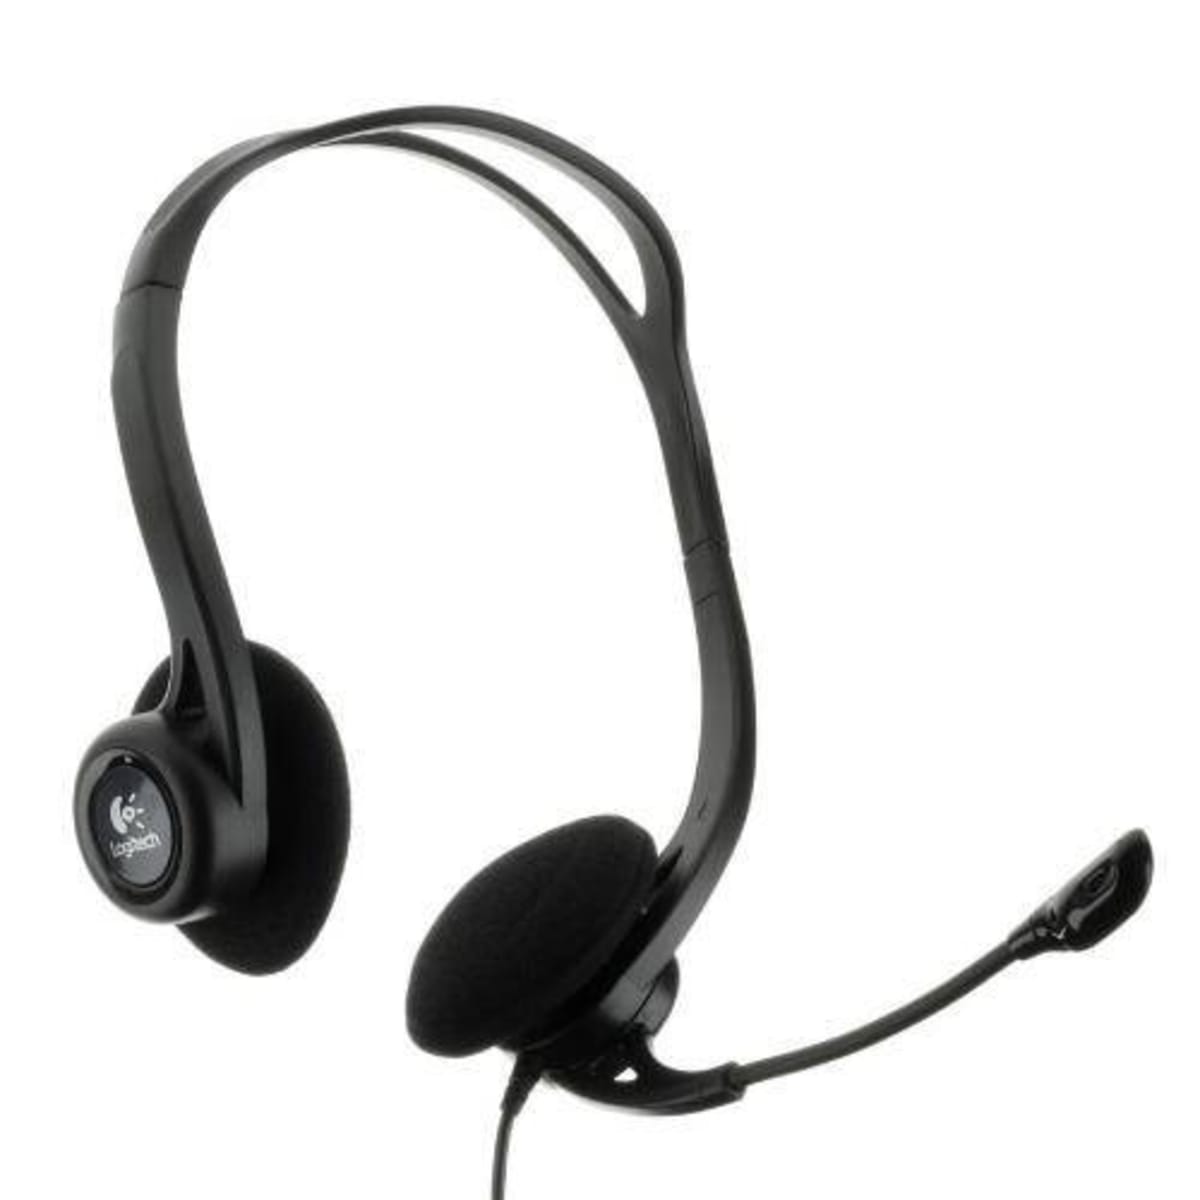 Logitech PC Headset 860 Konga | Shopping Online